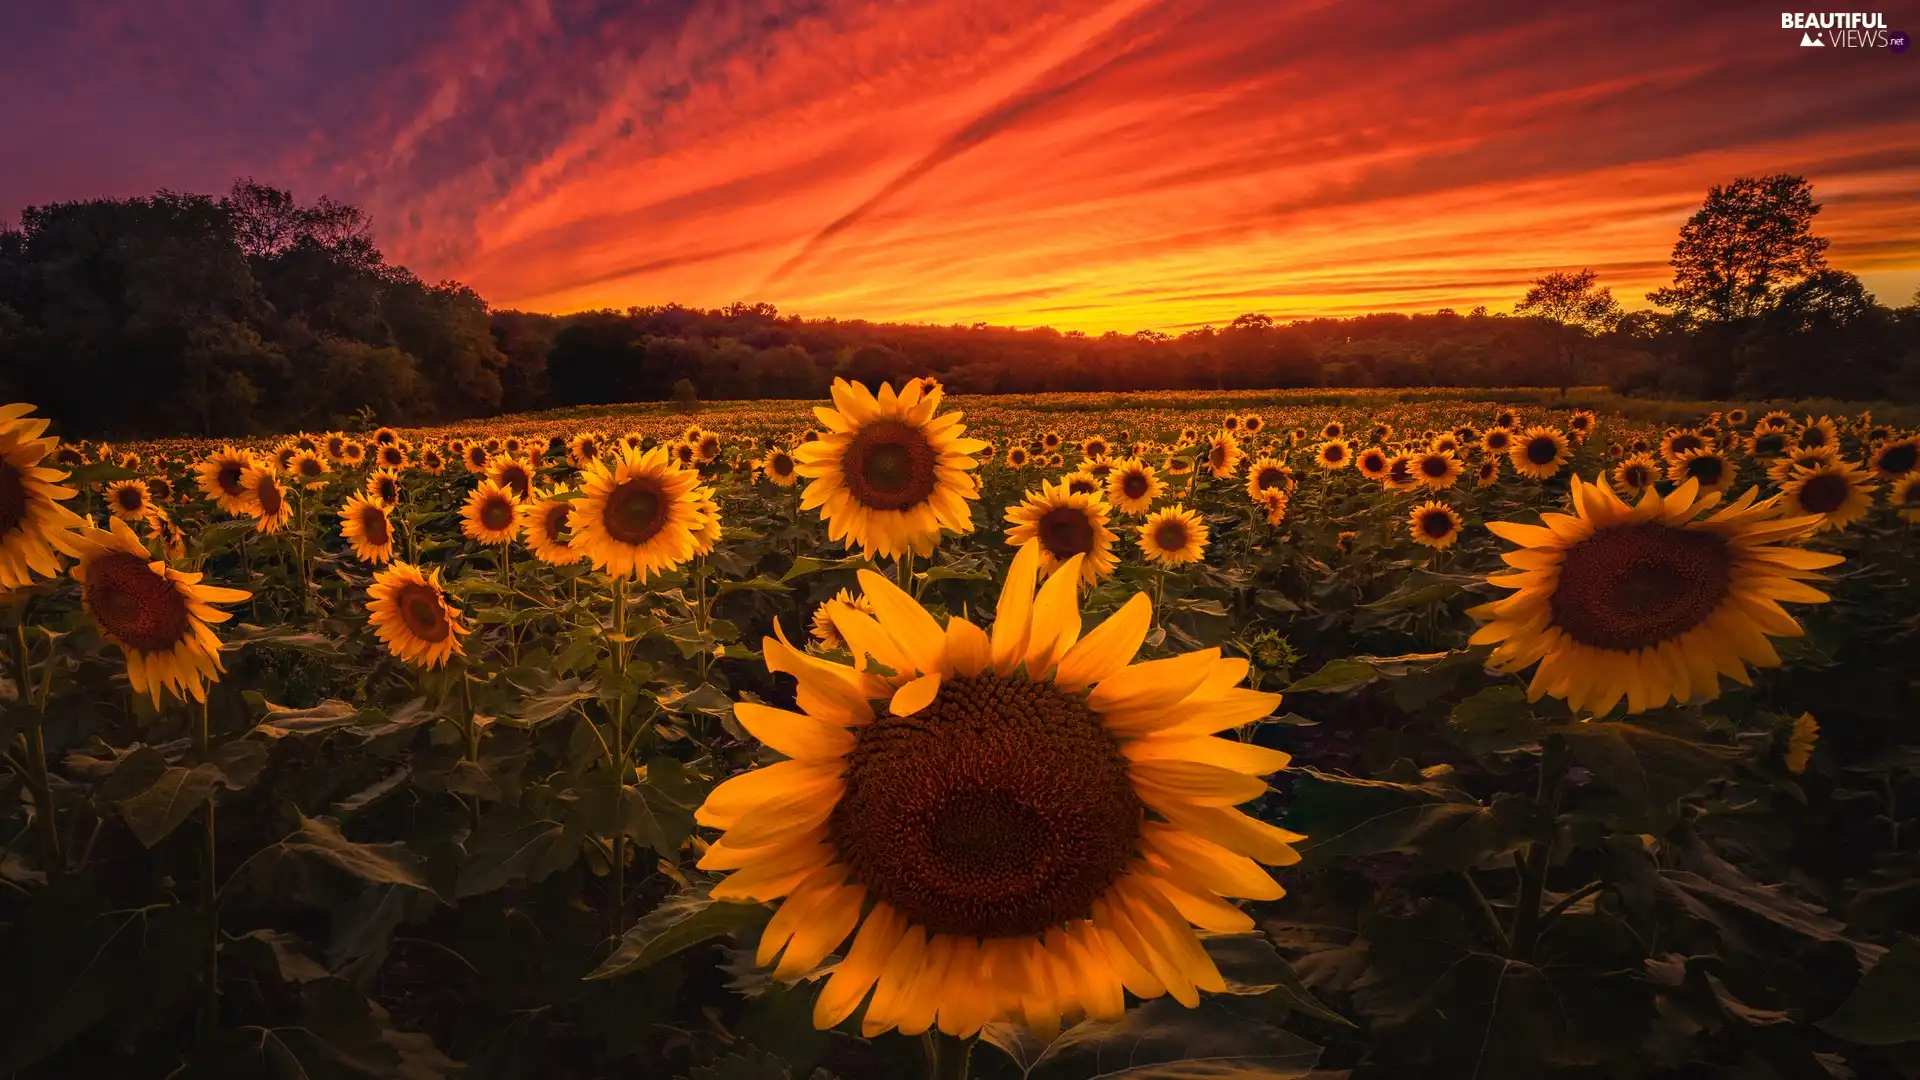 Great Sunsets, Field, Nice sunflowers